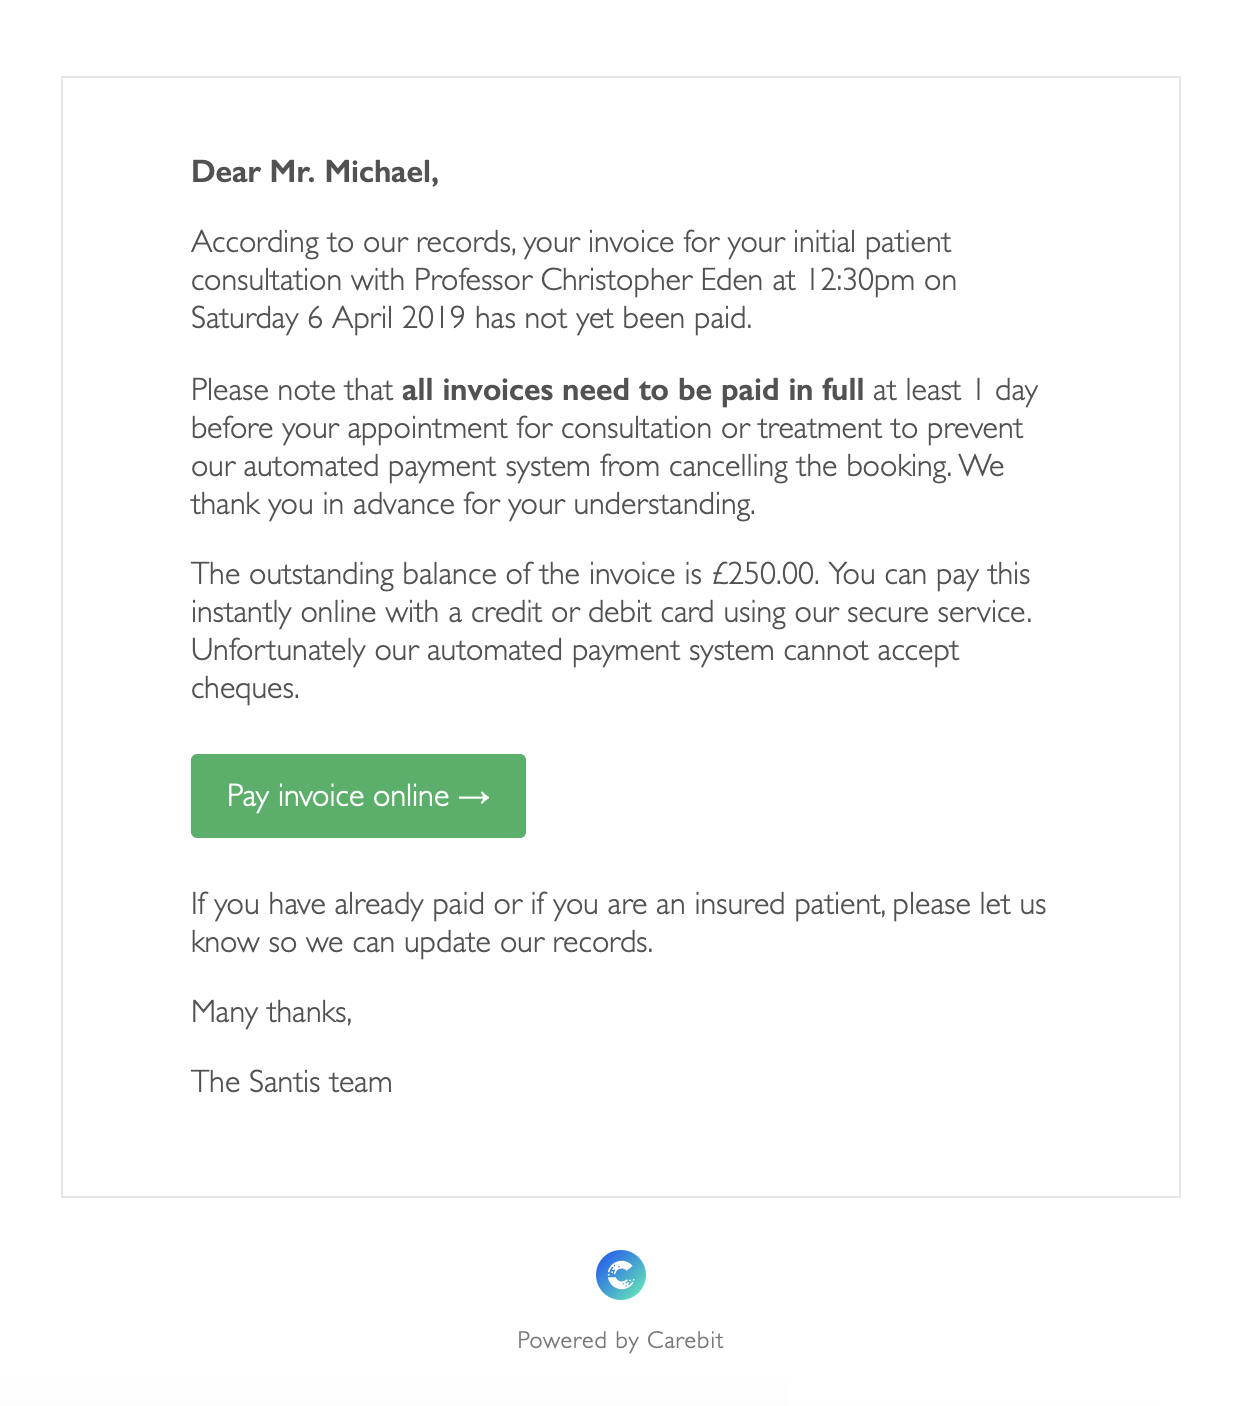 Carebit - payment reminder email